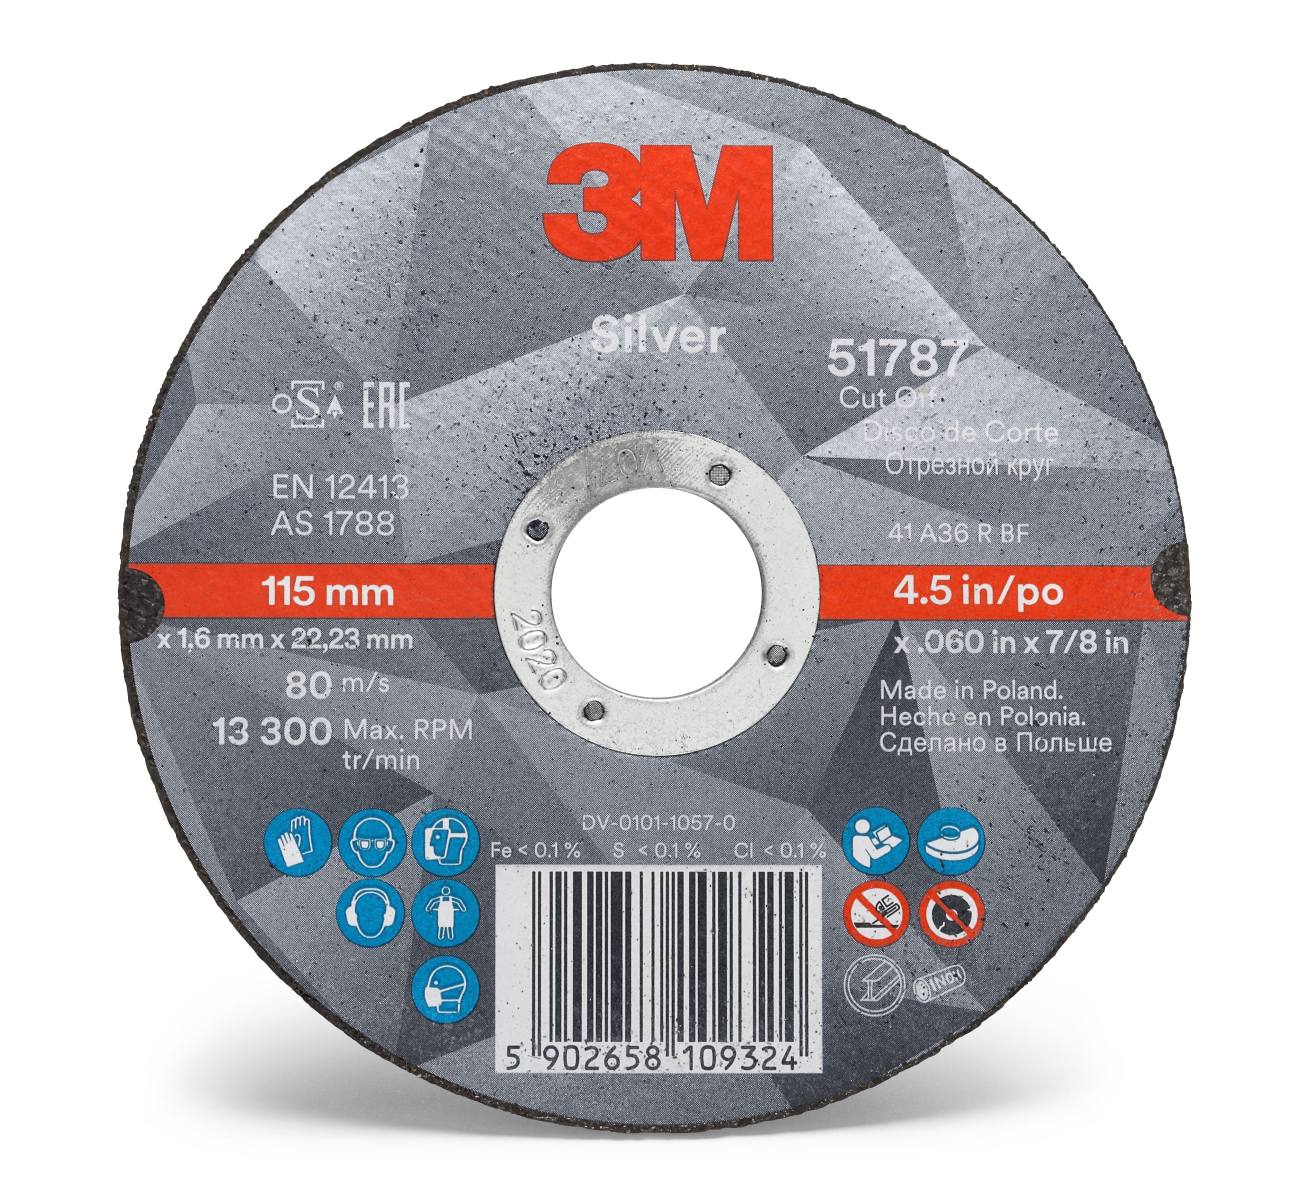 Disco da taglio 3M Silver Cut-Off, 125 mm, 1,0 mm, 22,23 mm, T41, 51790